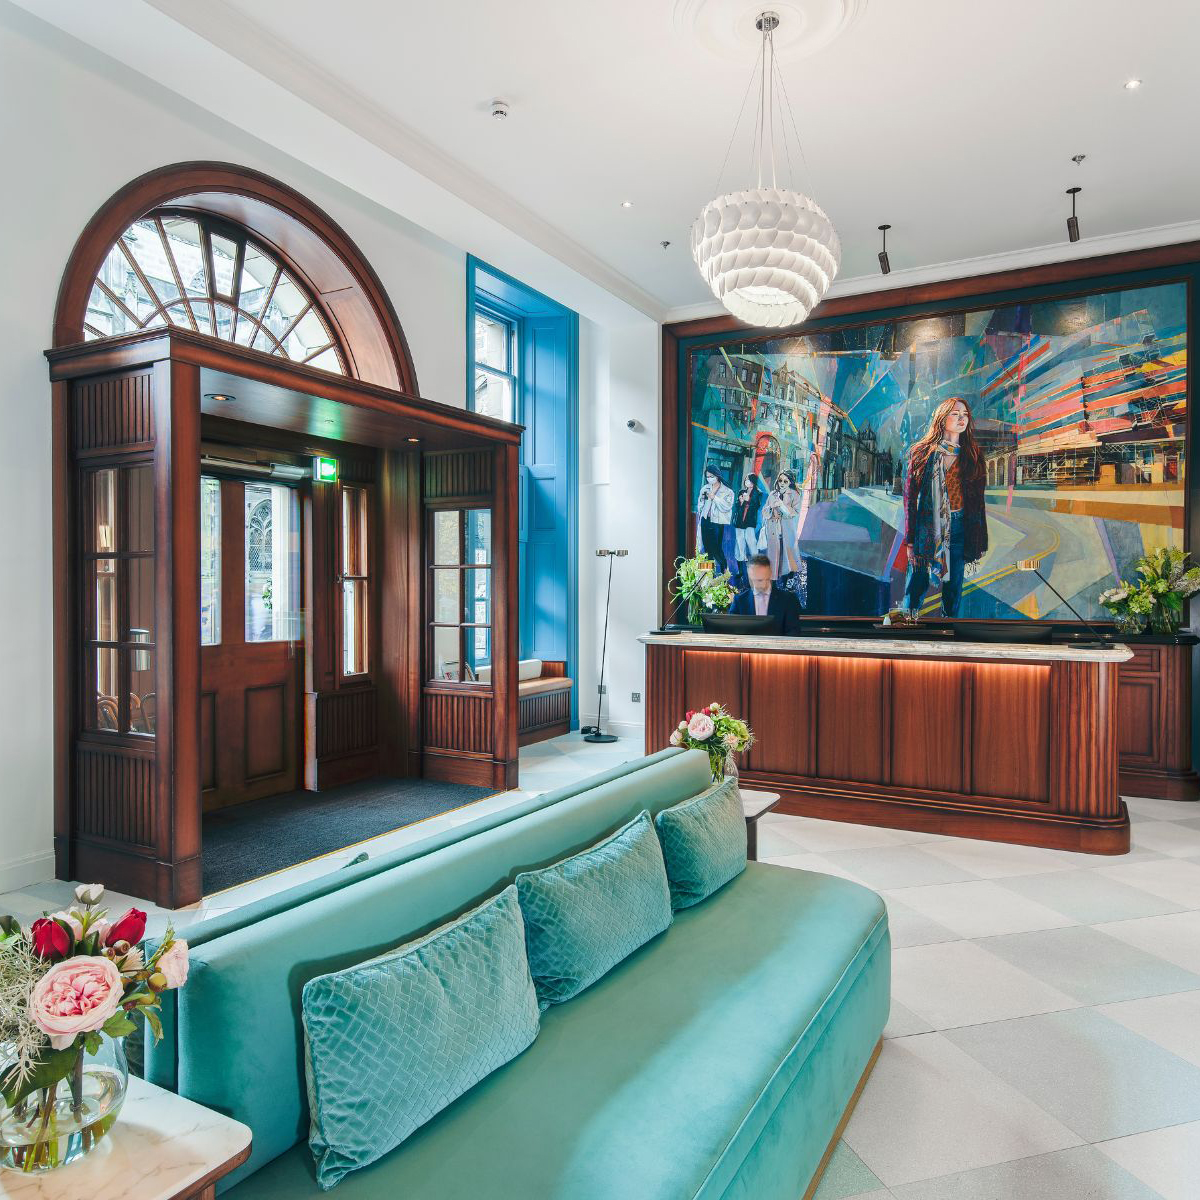 Edinburgh hotel combining heritage and modern-day design achieves vision with Häfele ironmongery